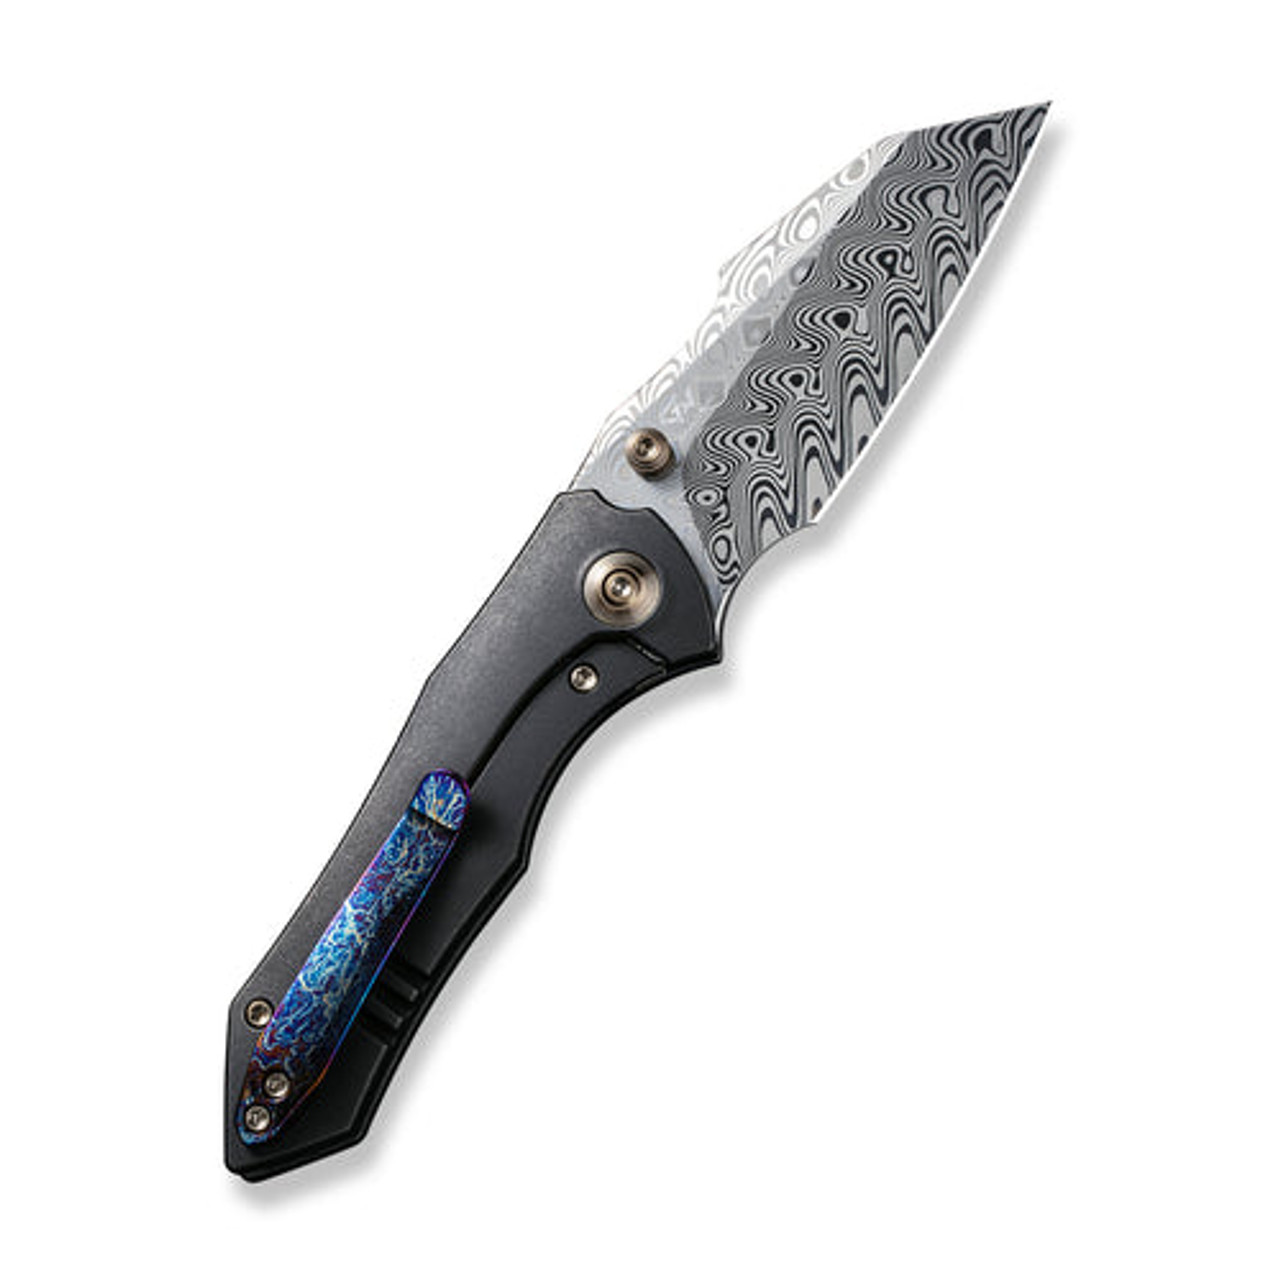 S.E.R.E. 2020™ Straight-Edge Blade Folding Knife 3.6 - Olive Drab